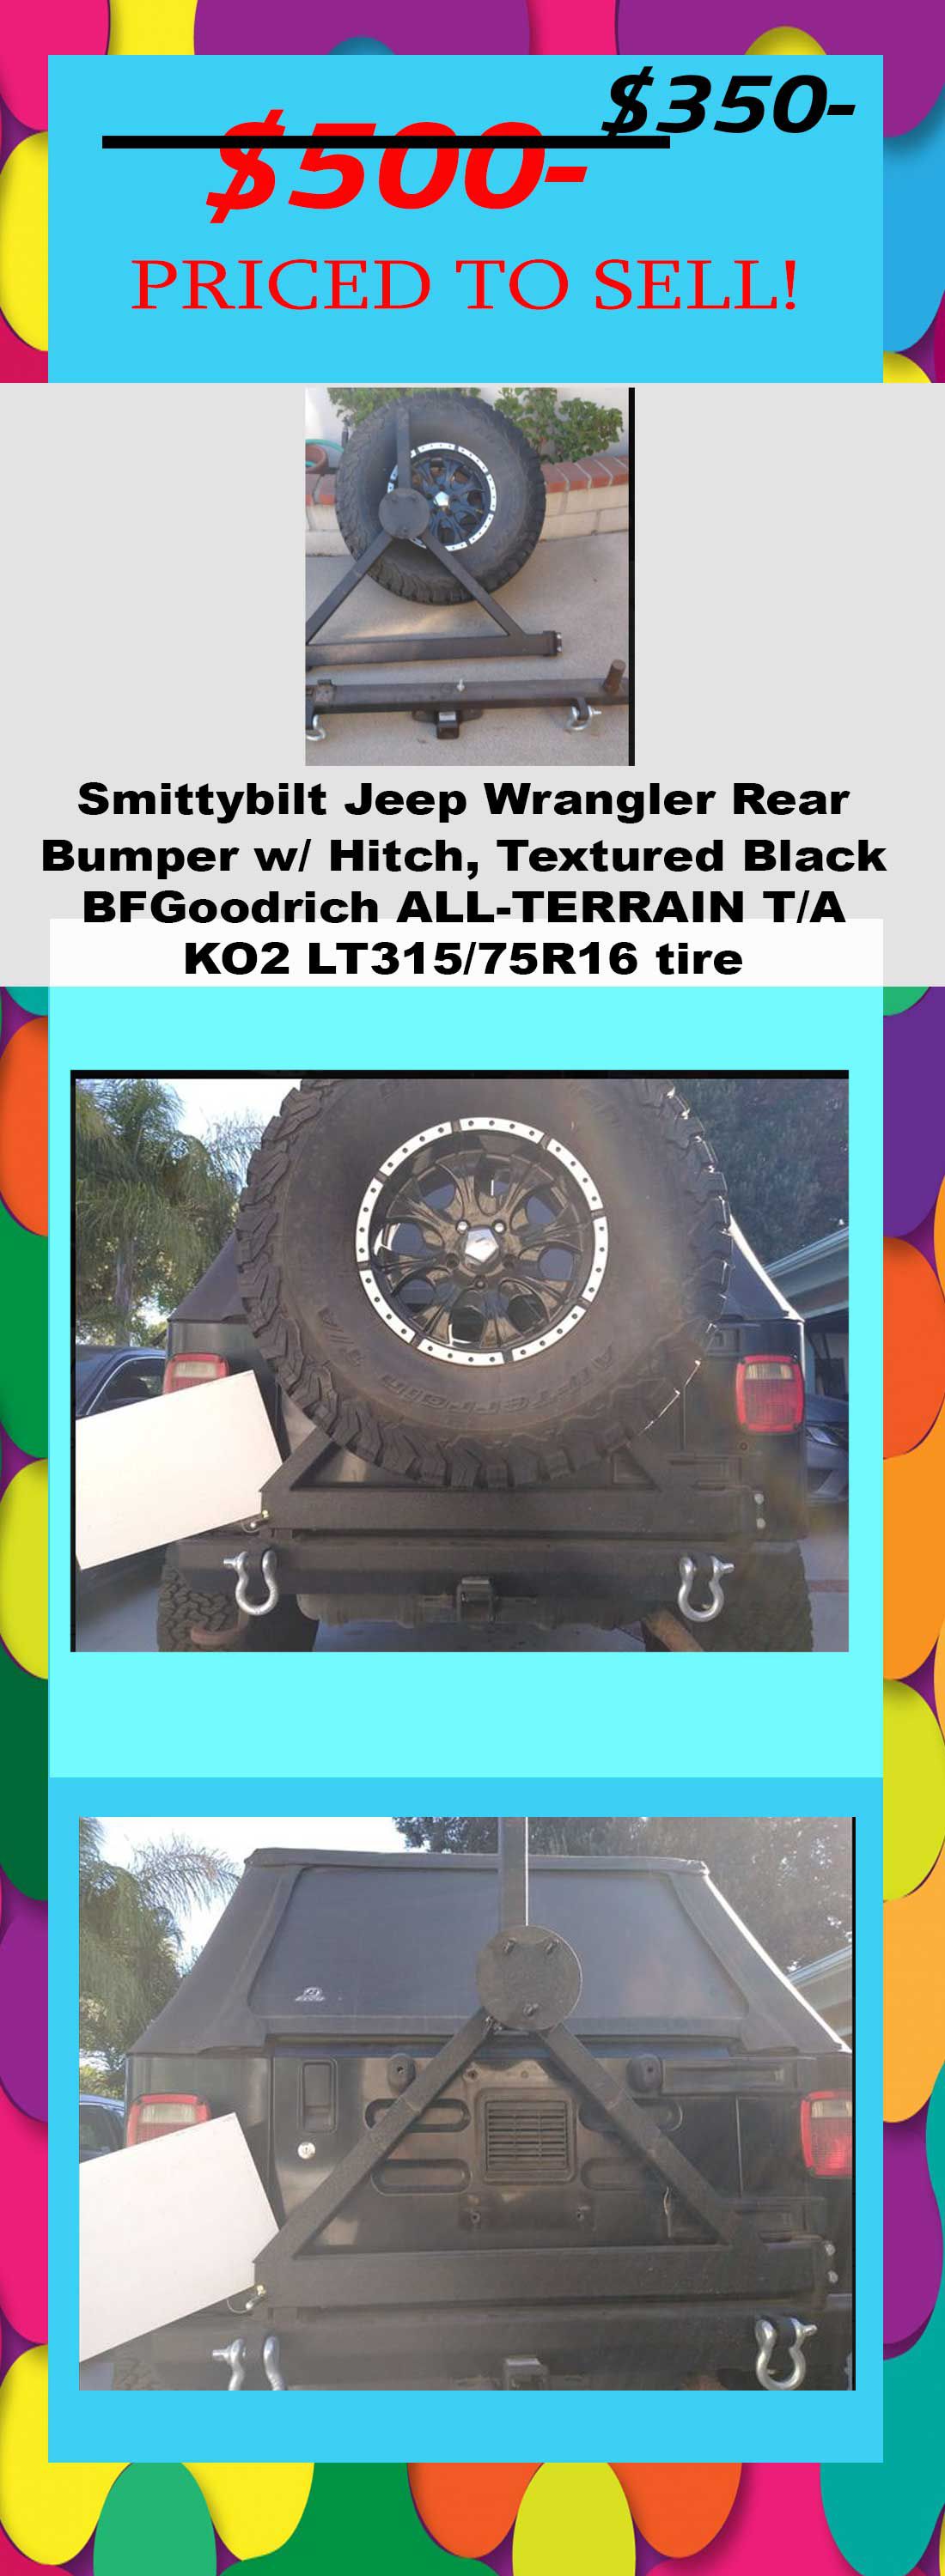 Smittybilt Jeep Wrangler Rear Bumper w/ Hitch, Textured BlackBFGoodrich ALL-TERRAIN T/A KO2 LT315/75R16 tire